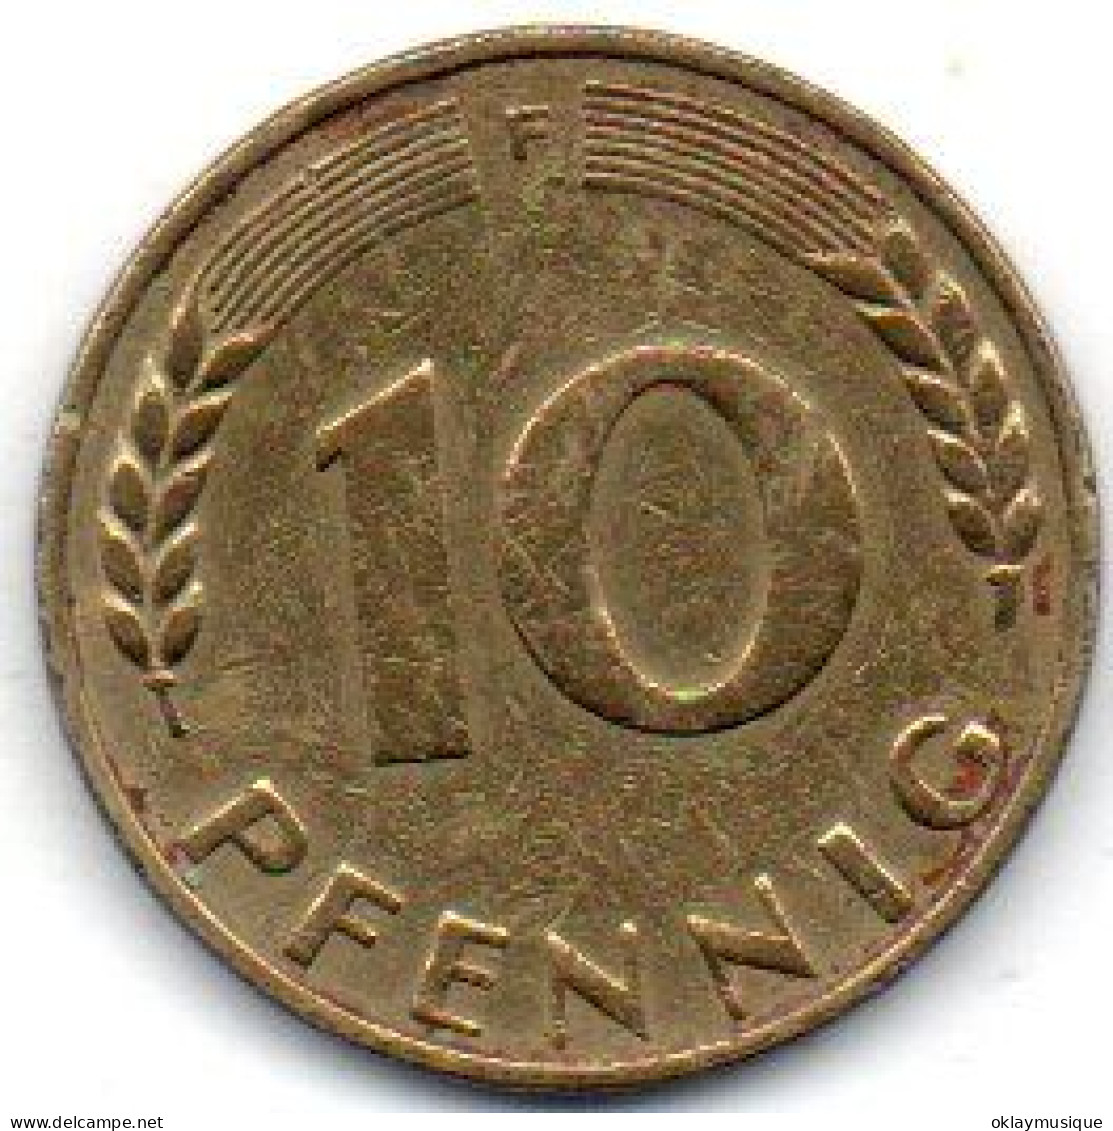 10 Pfennig 1950J - Danimarca